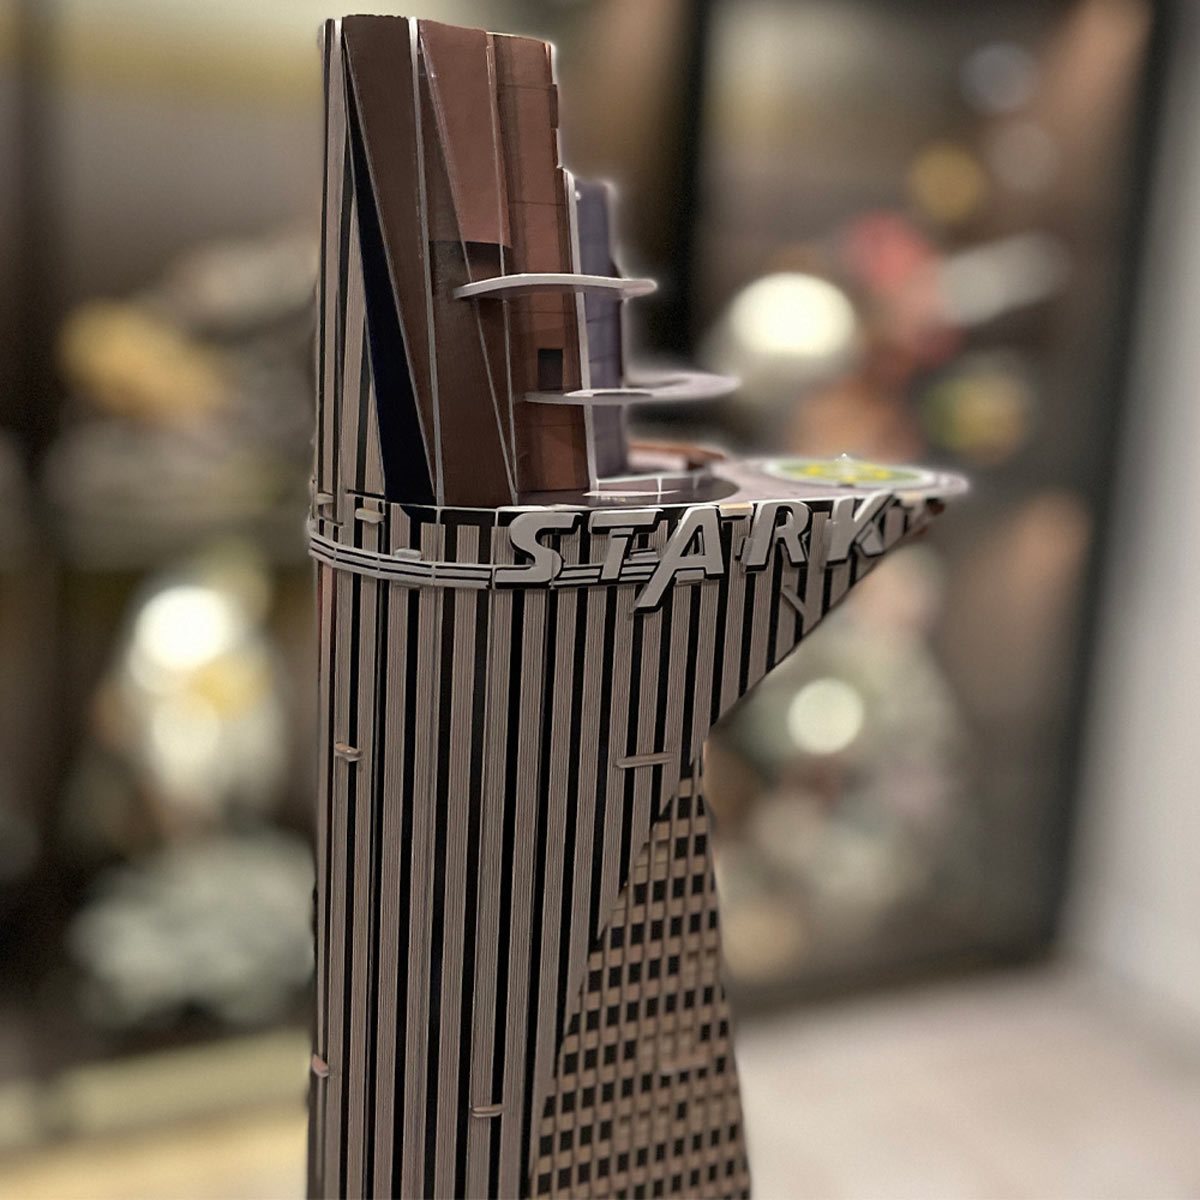 Marvel Avengers Tower 3D Model Puzzle Kit